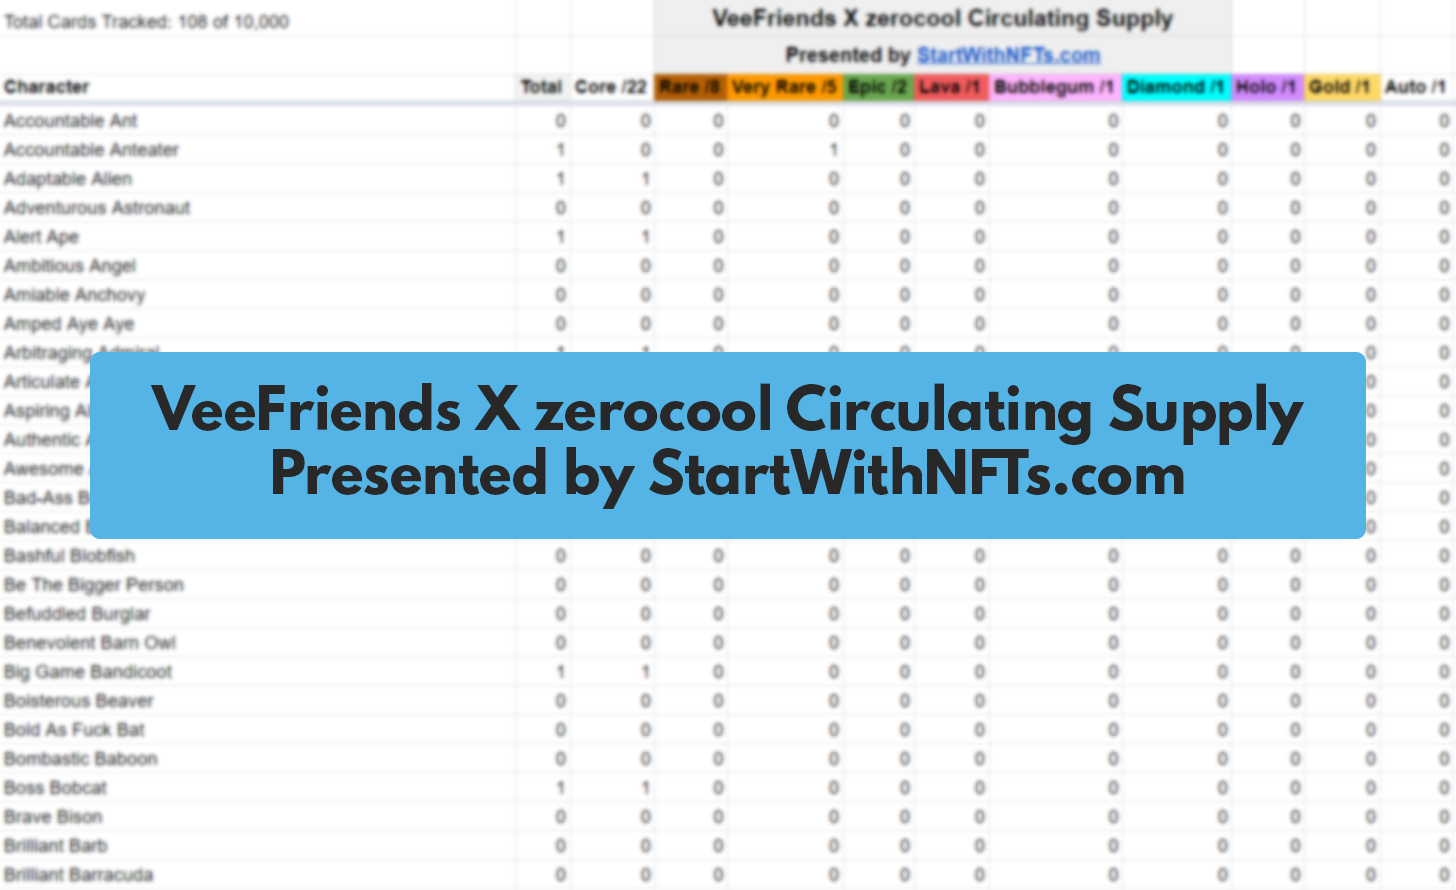 StartWithNFT.com's VeeFriend x zerocool Circulating Supply Tracker